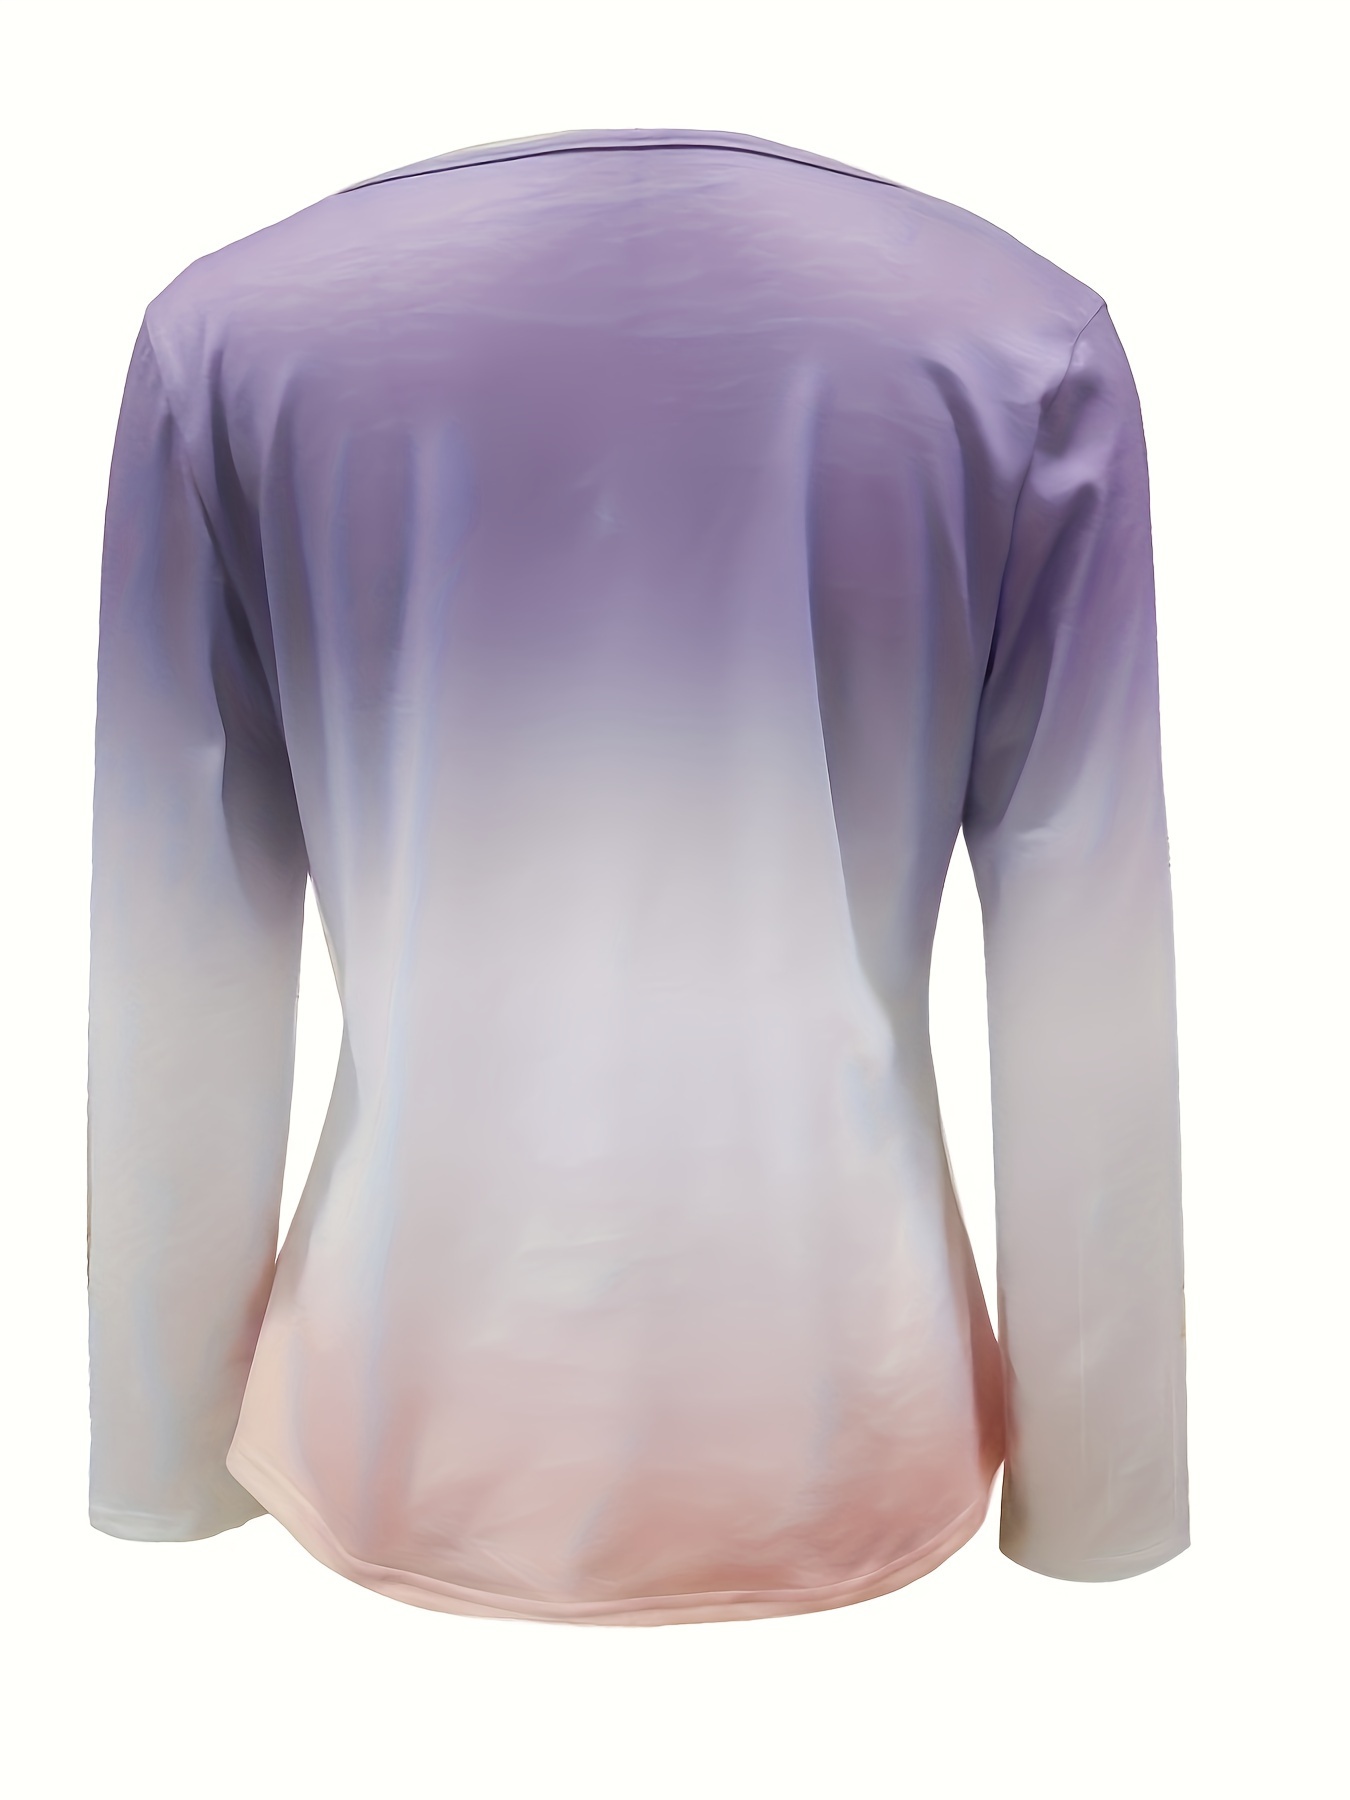 Gradient Fuchsia Women's Long Sleeve Sports T-Shirt